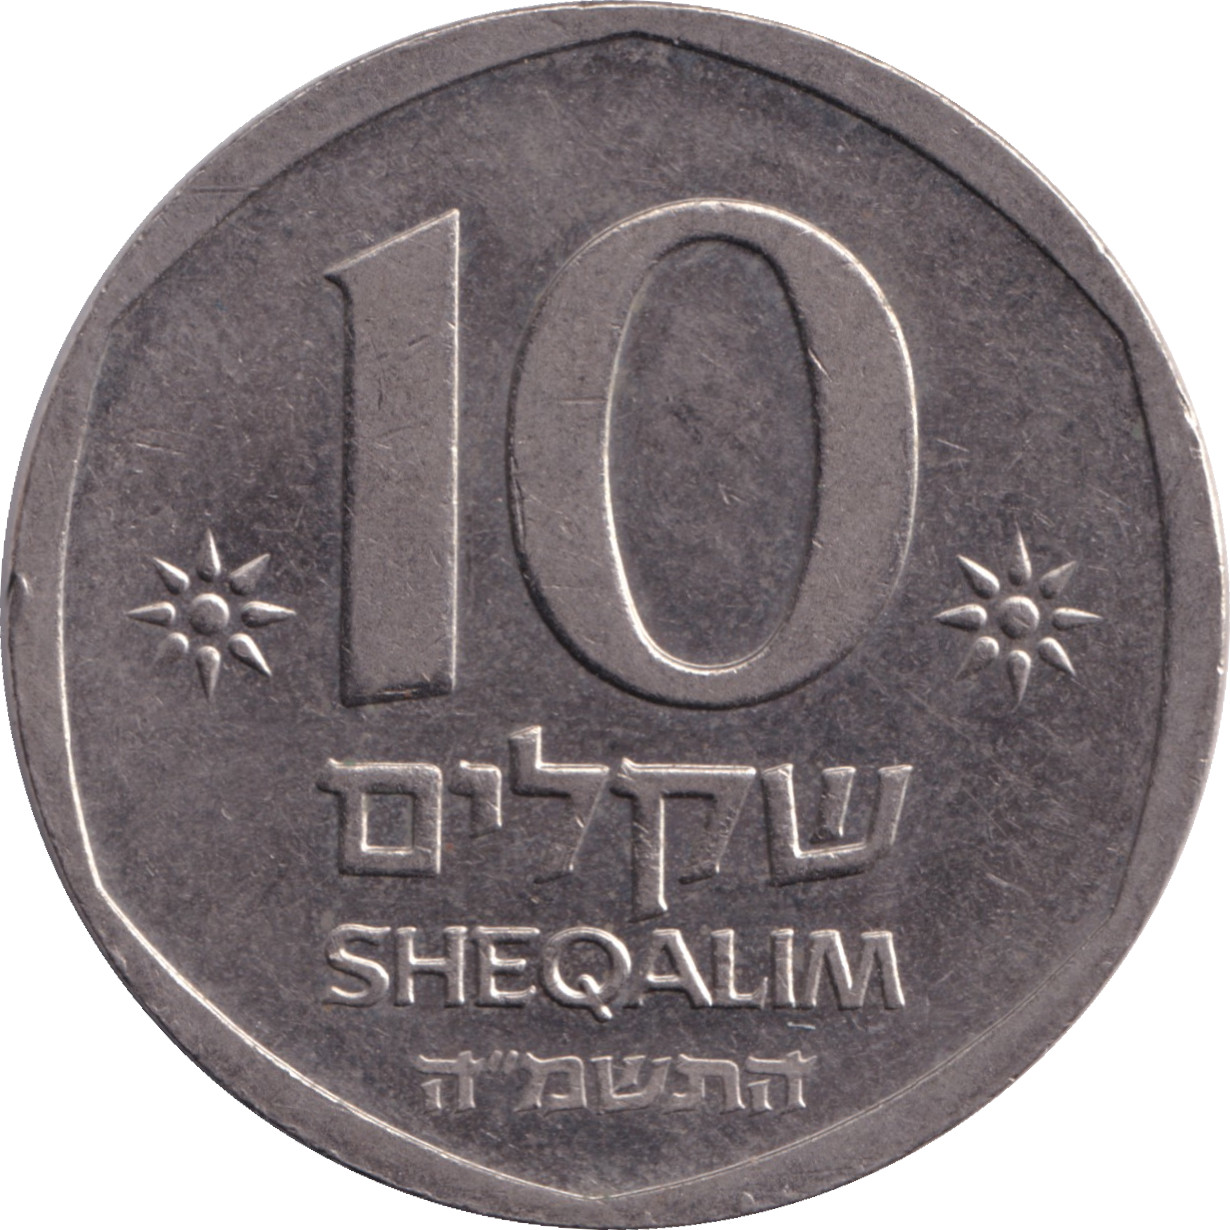 10 sheqalim - Old ship